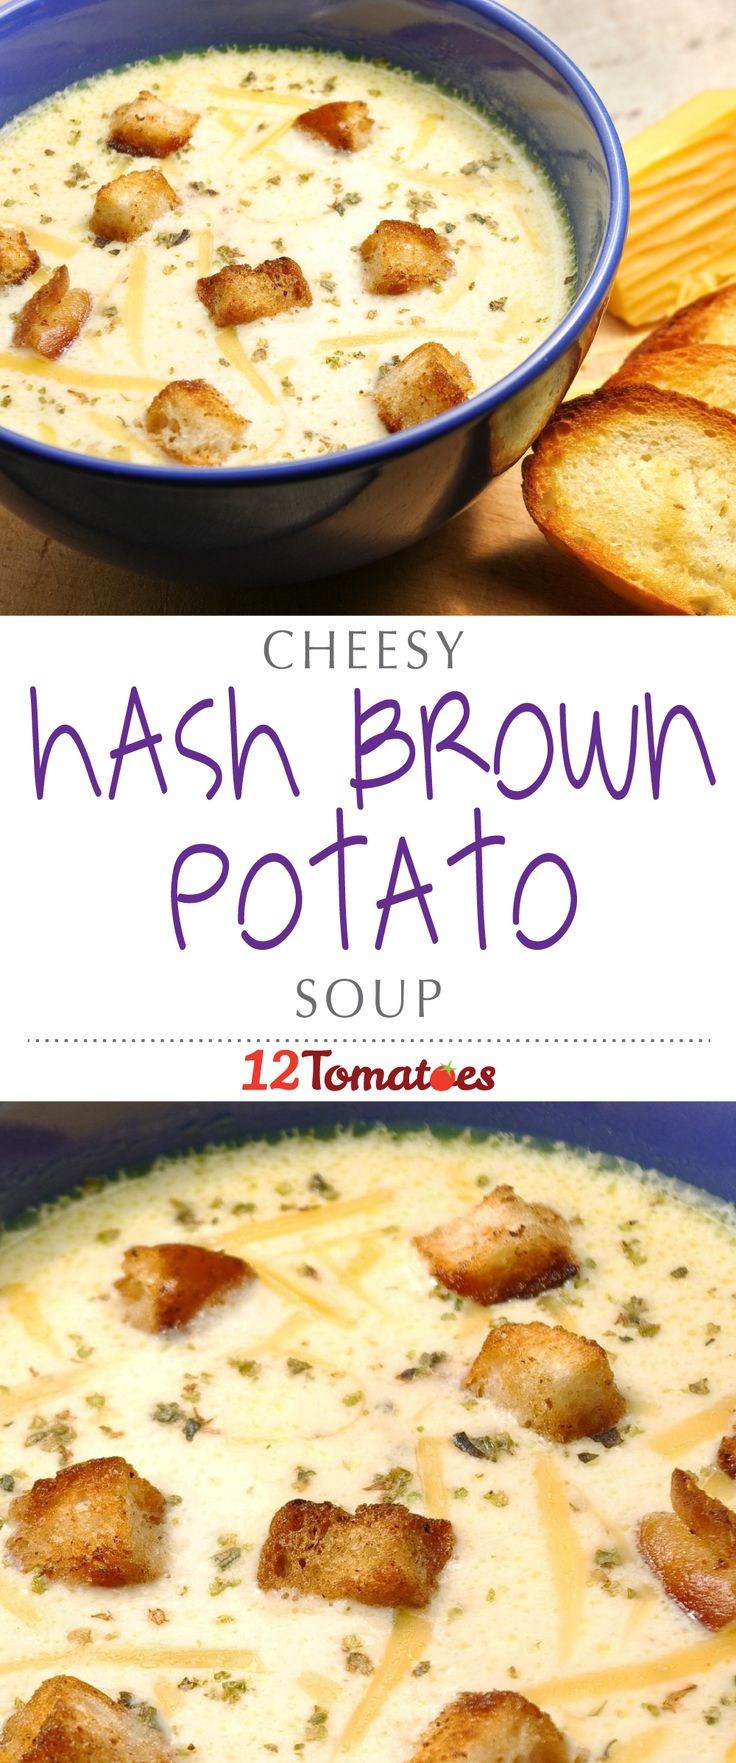 Potato Soup Using Hash Browns
 The Best Ideas for Potato soup Using Hash Browns Best